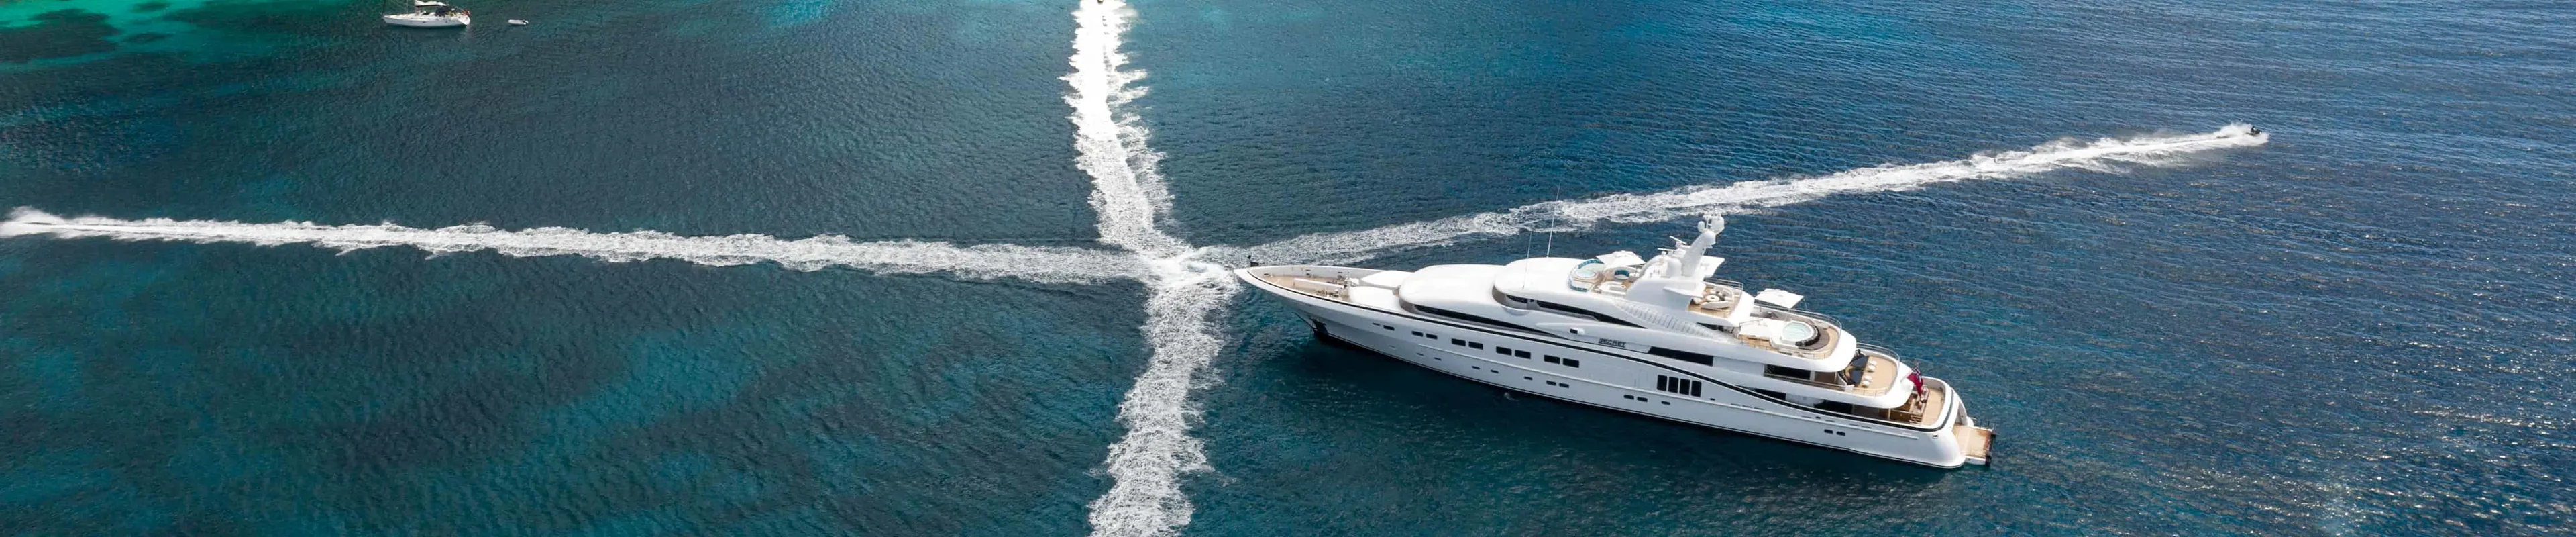 A super yacht in a bay